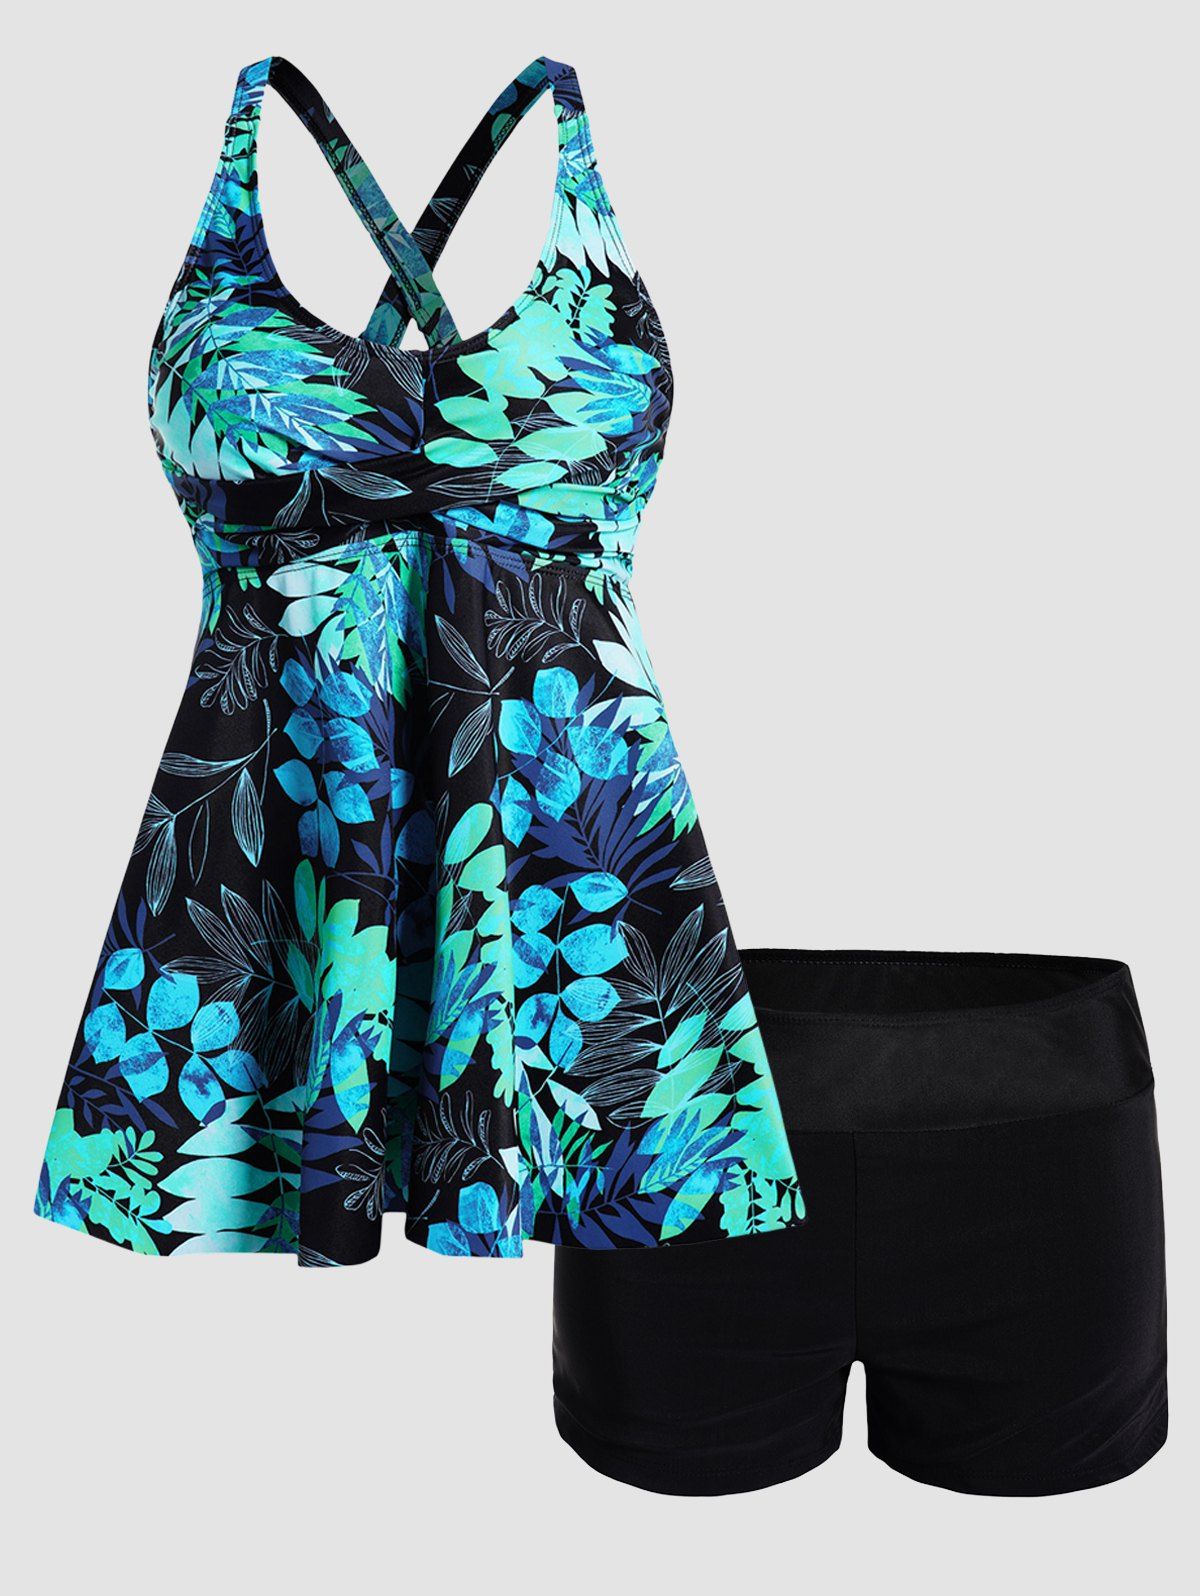 Tropical Tankini Swimsuit Twisted Flower Leaf Print Swimwear Crisscross Boyshorts Modest Bathing Suit - multicolor A 2XL